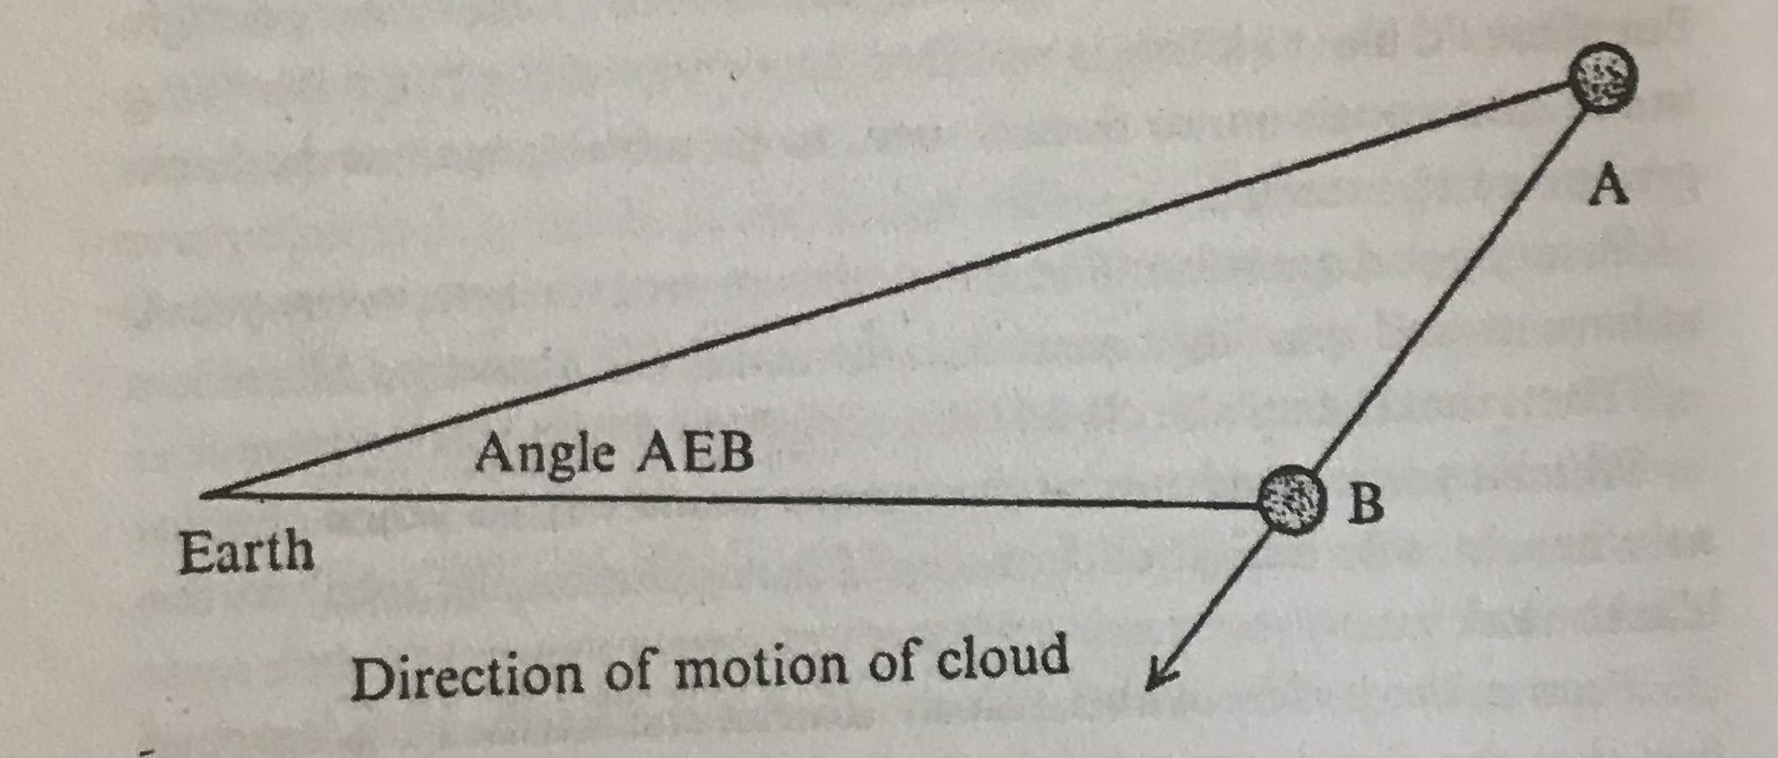 The Black Cloud diagram